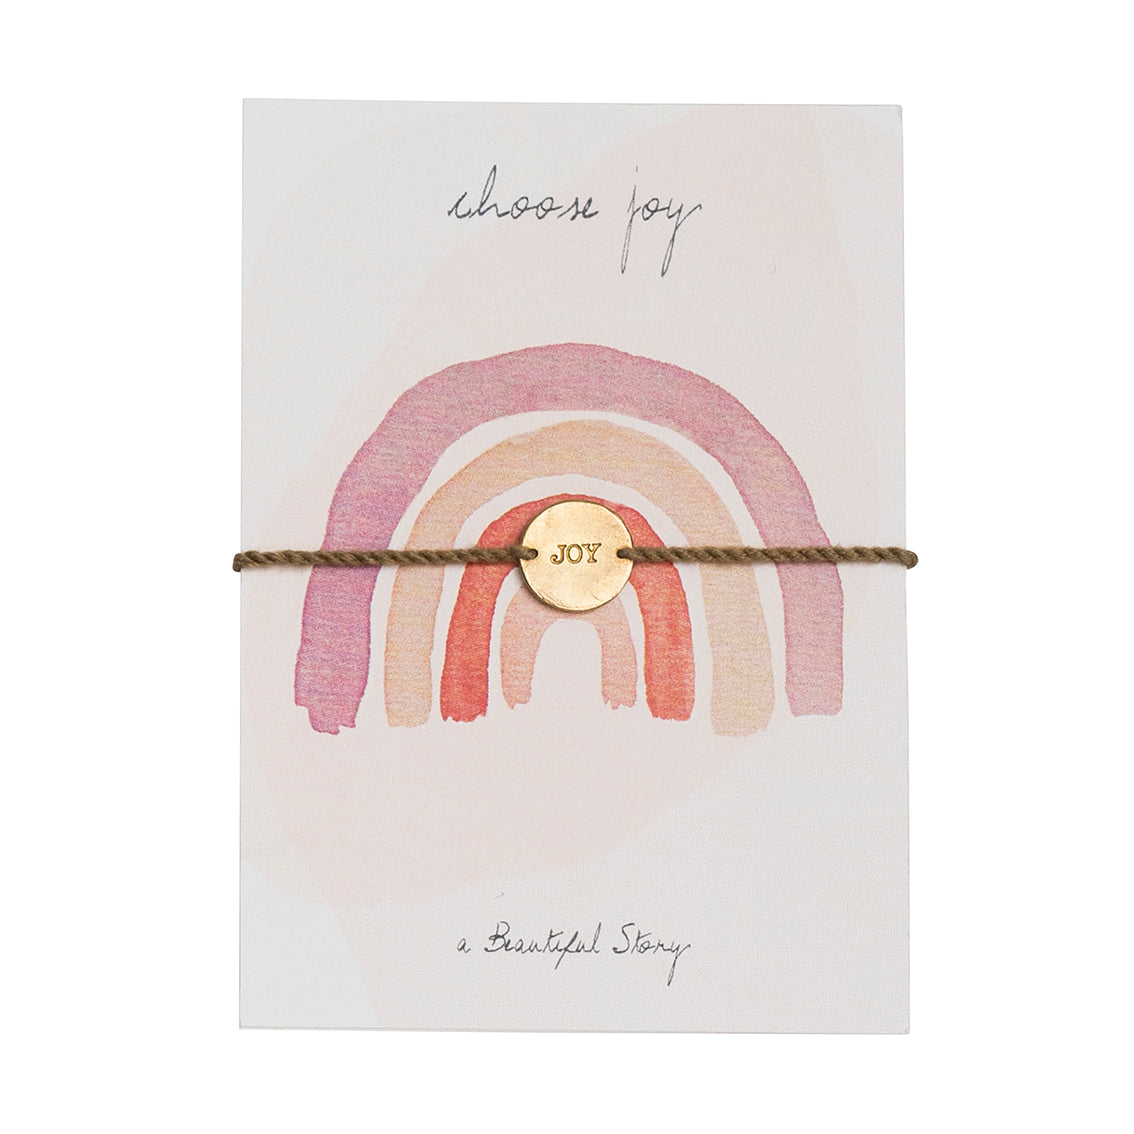 Jewelry Postcard Choose Joy van a Beautiful Story te koop bij LEEF mode en accessoires Meppel